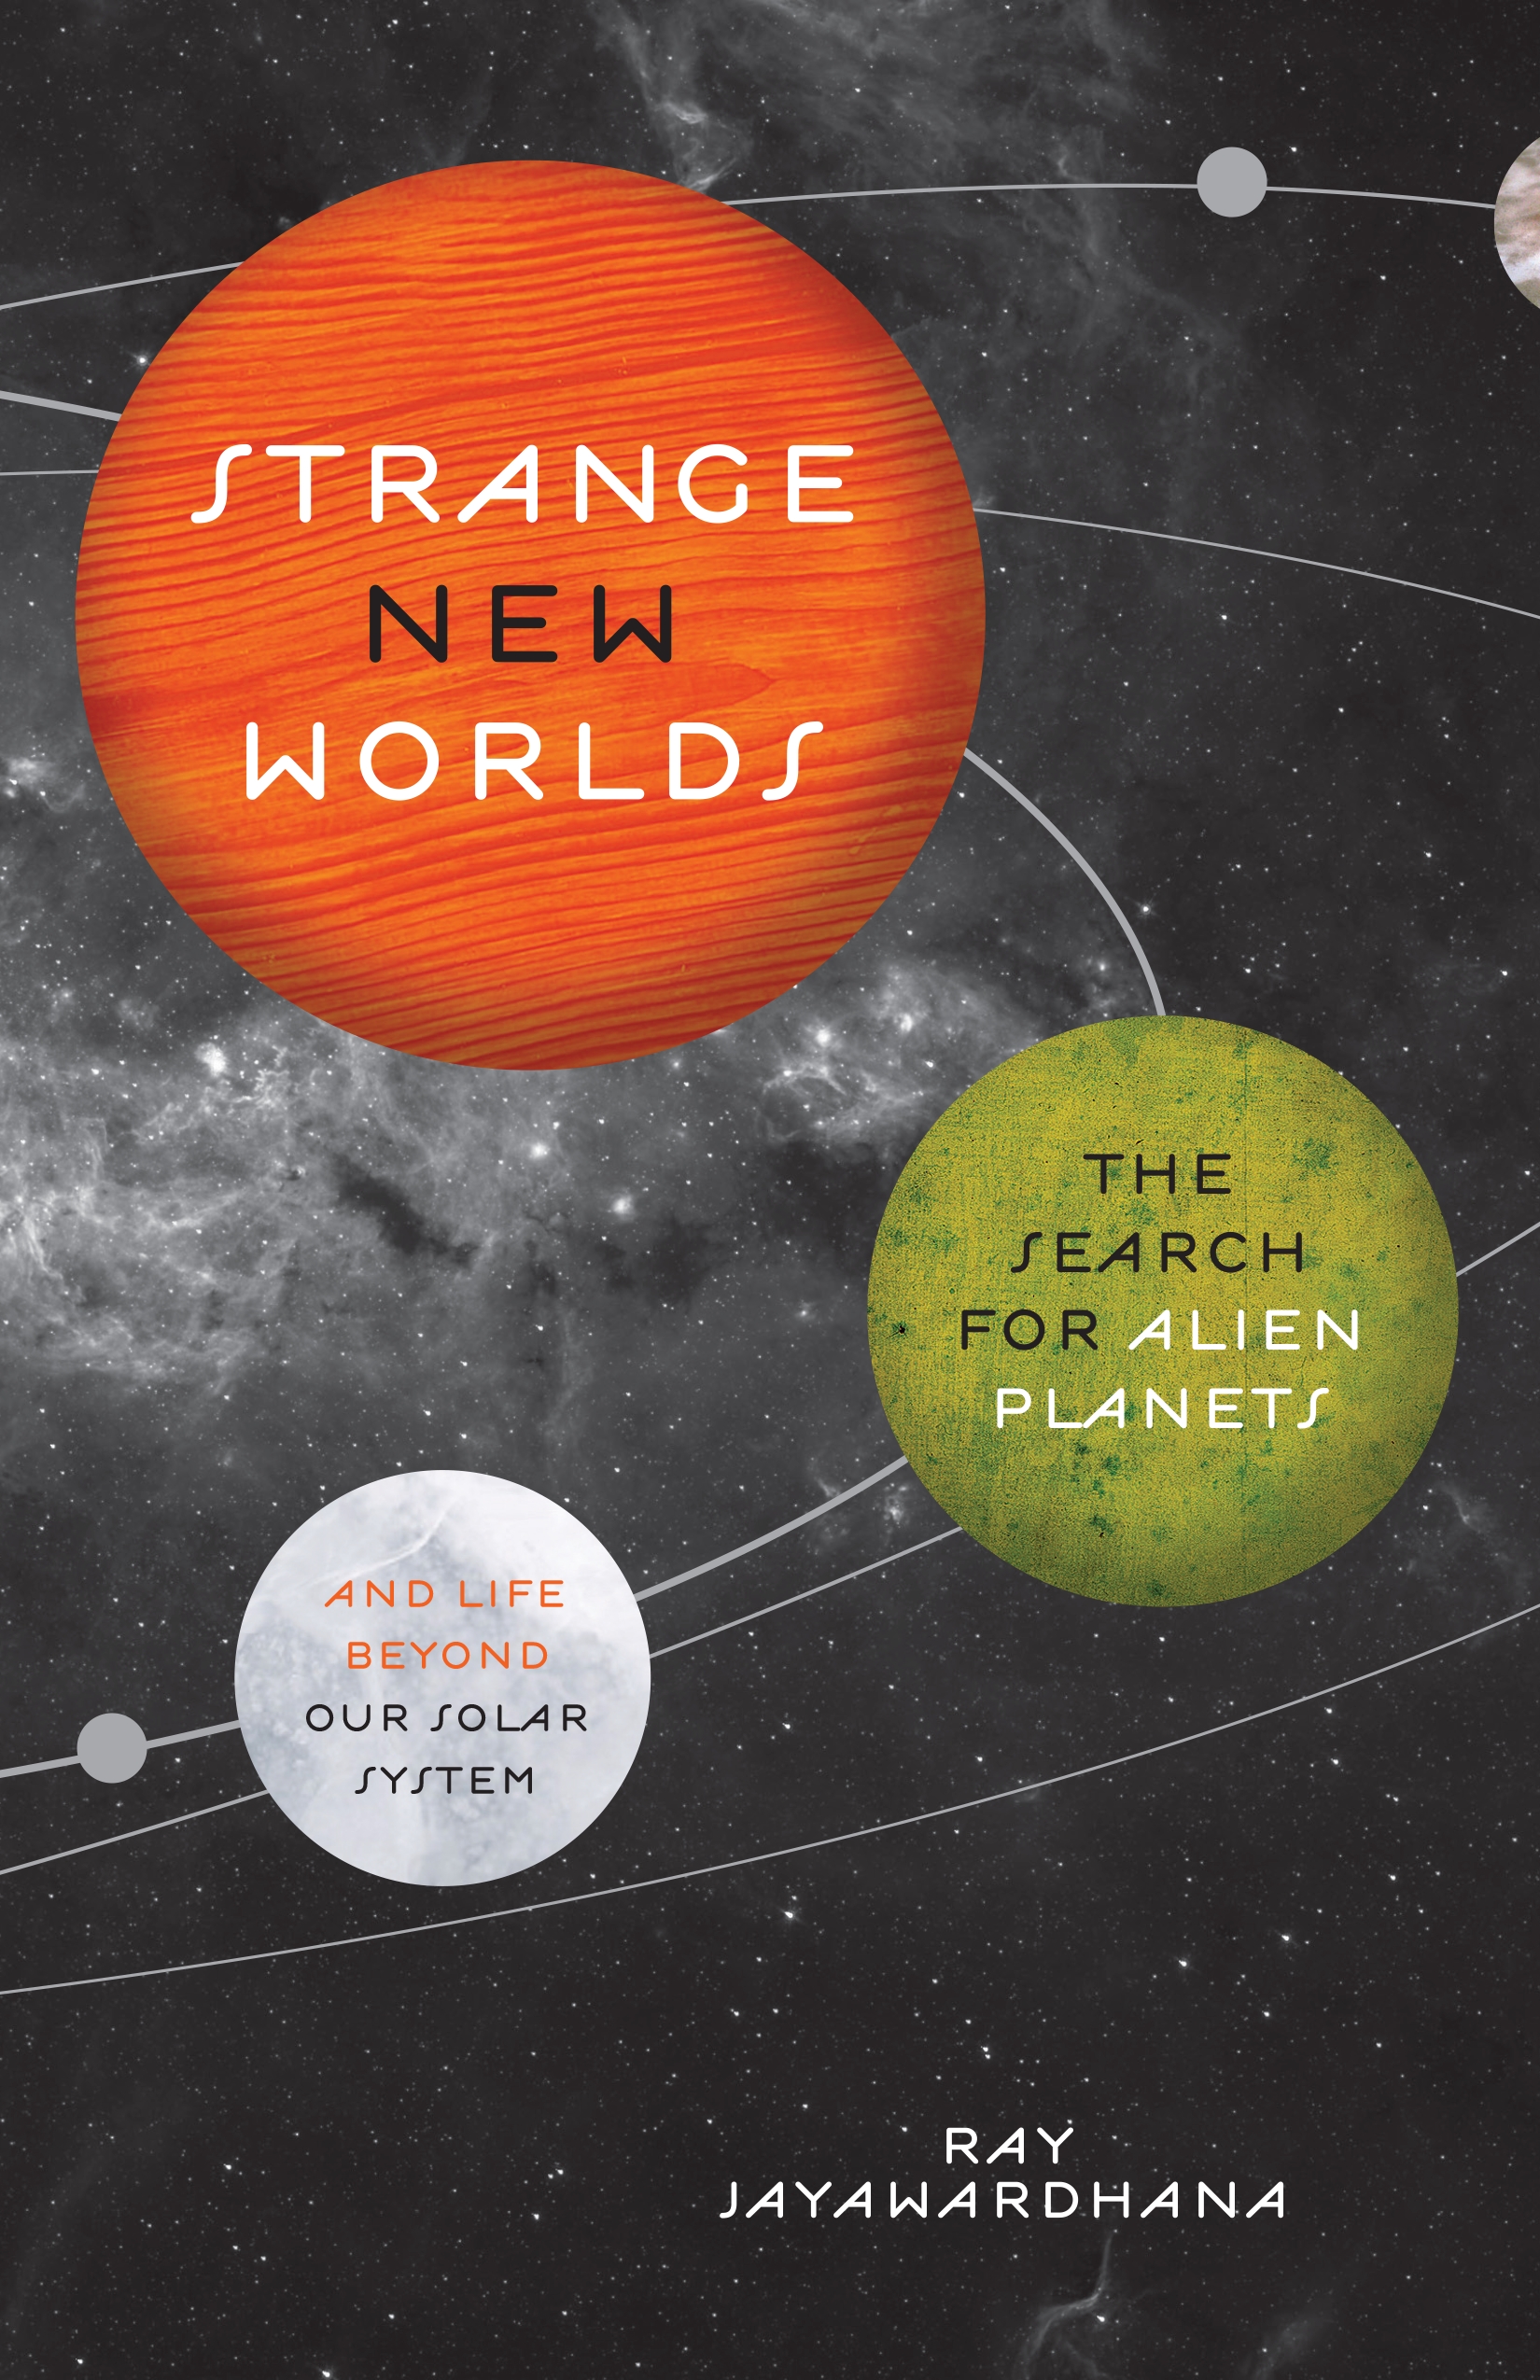 Strange　New　University　Worlds　Princeton　Press